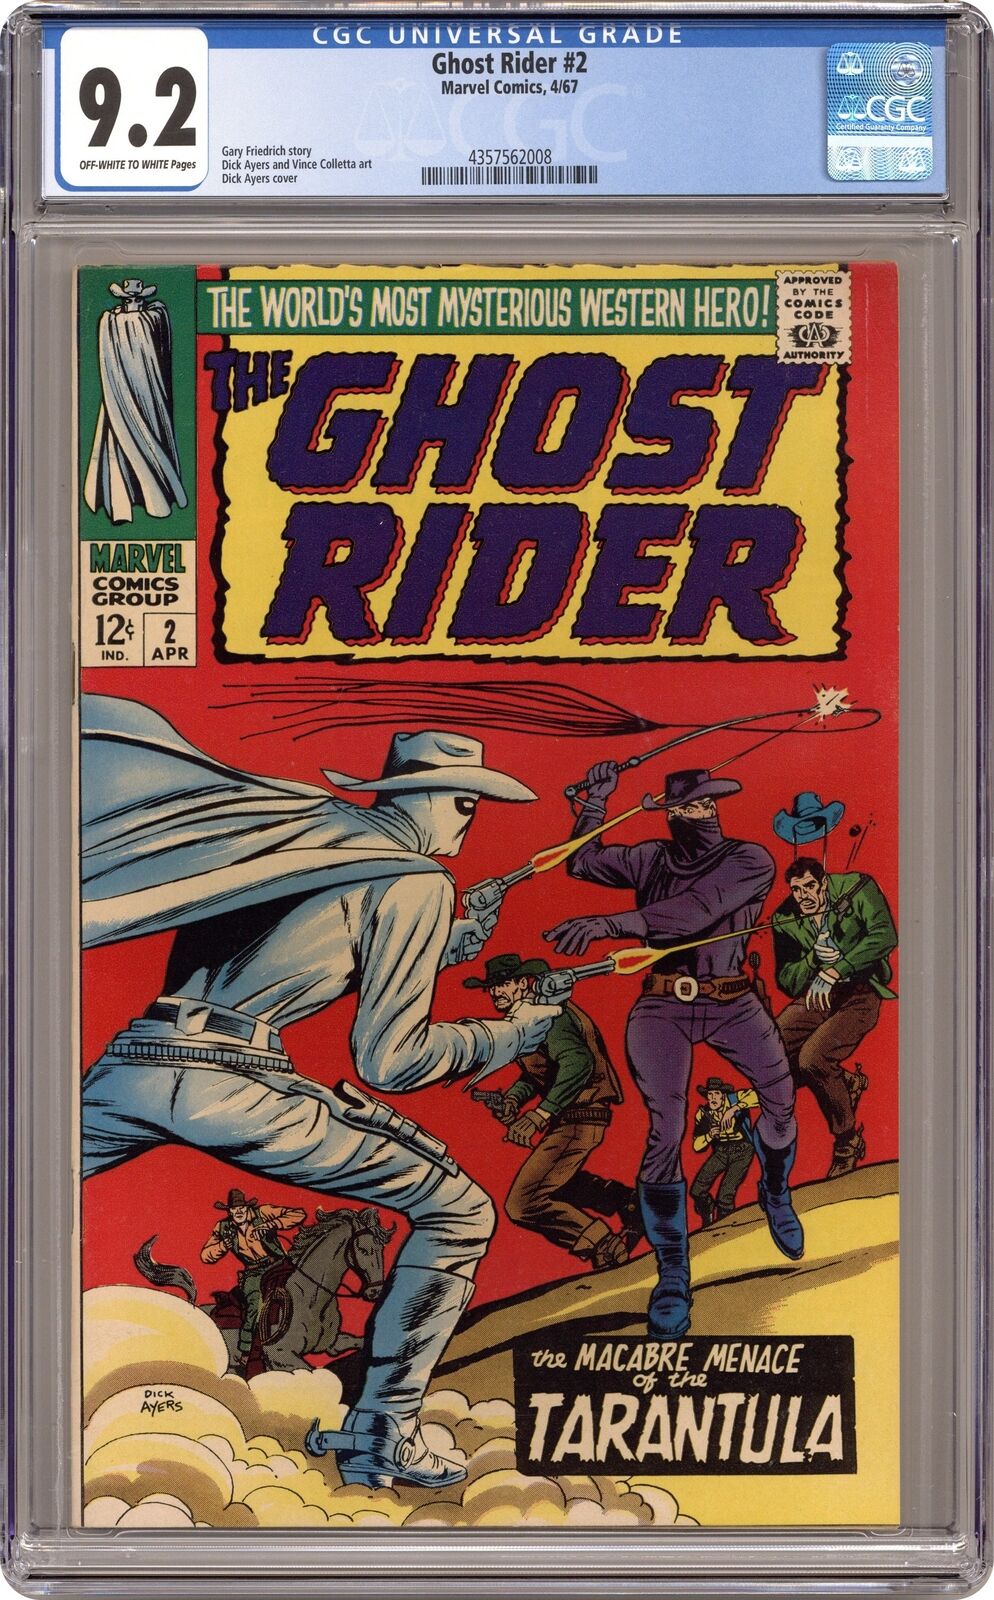 Ghost Rider #2 CGC 9.2 1967 4357562008